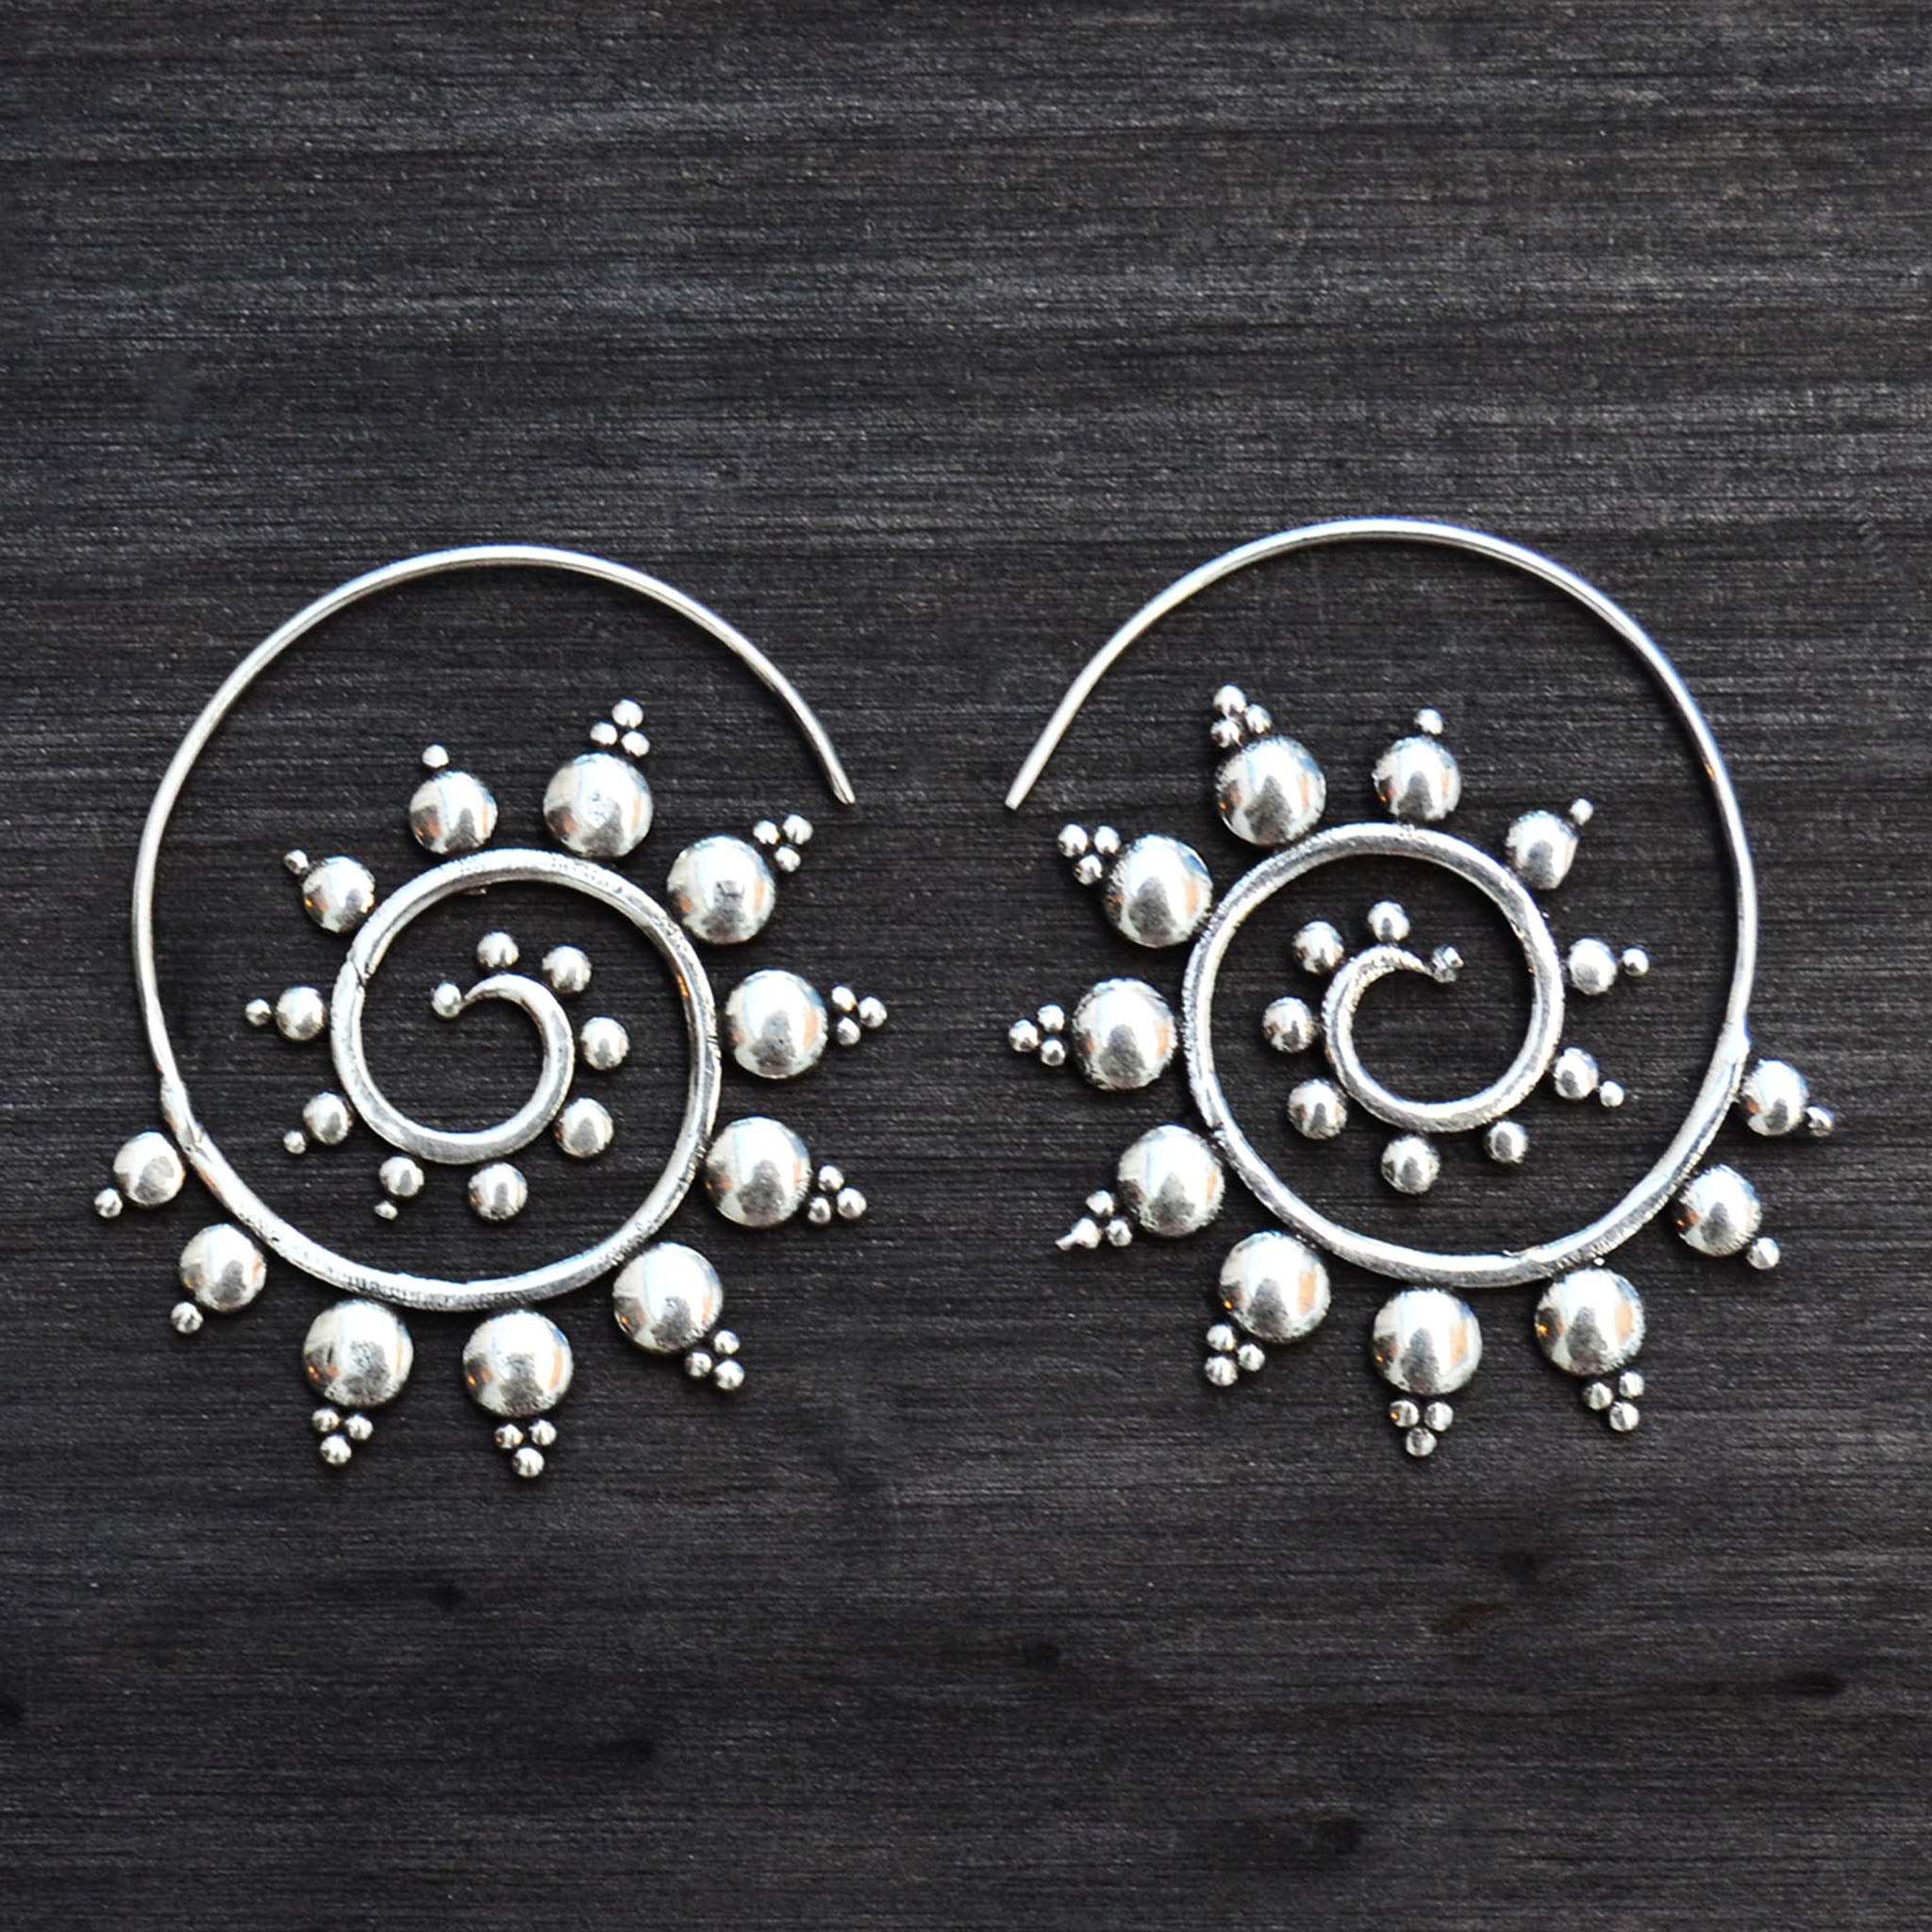 Spiral nomad earrings